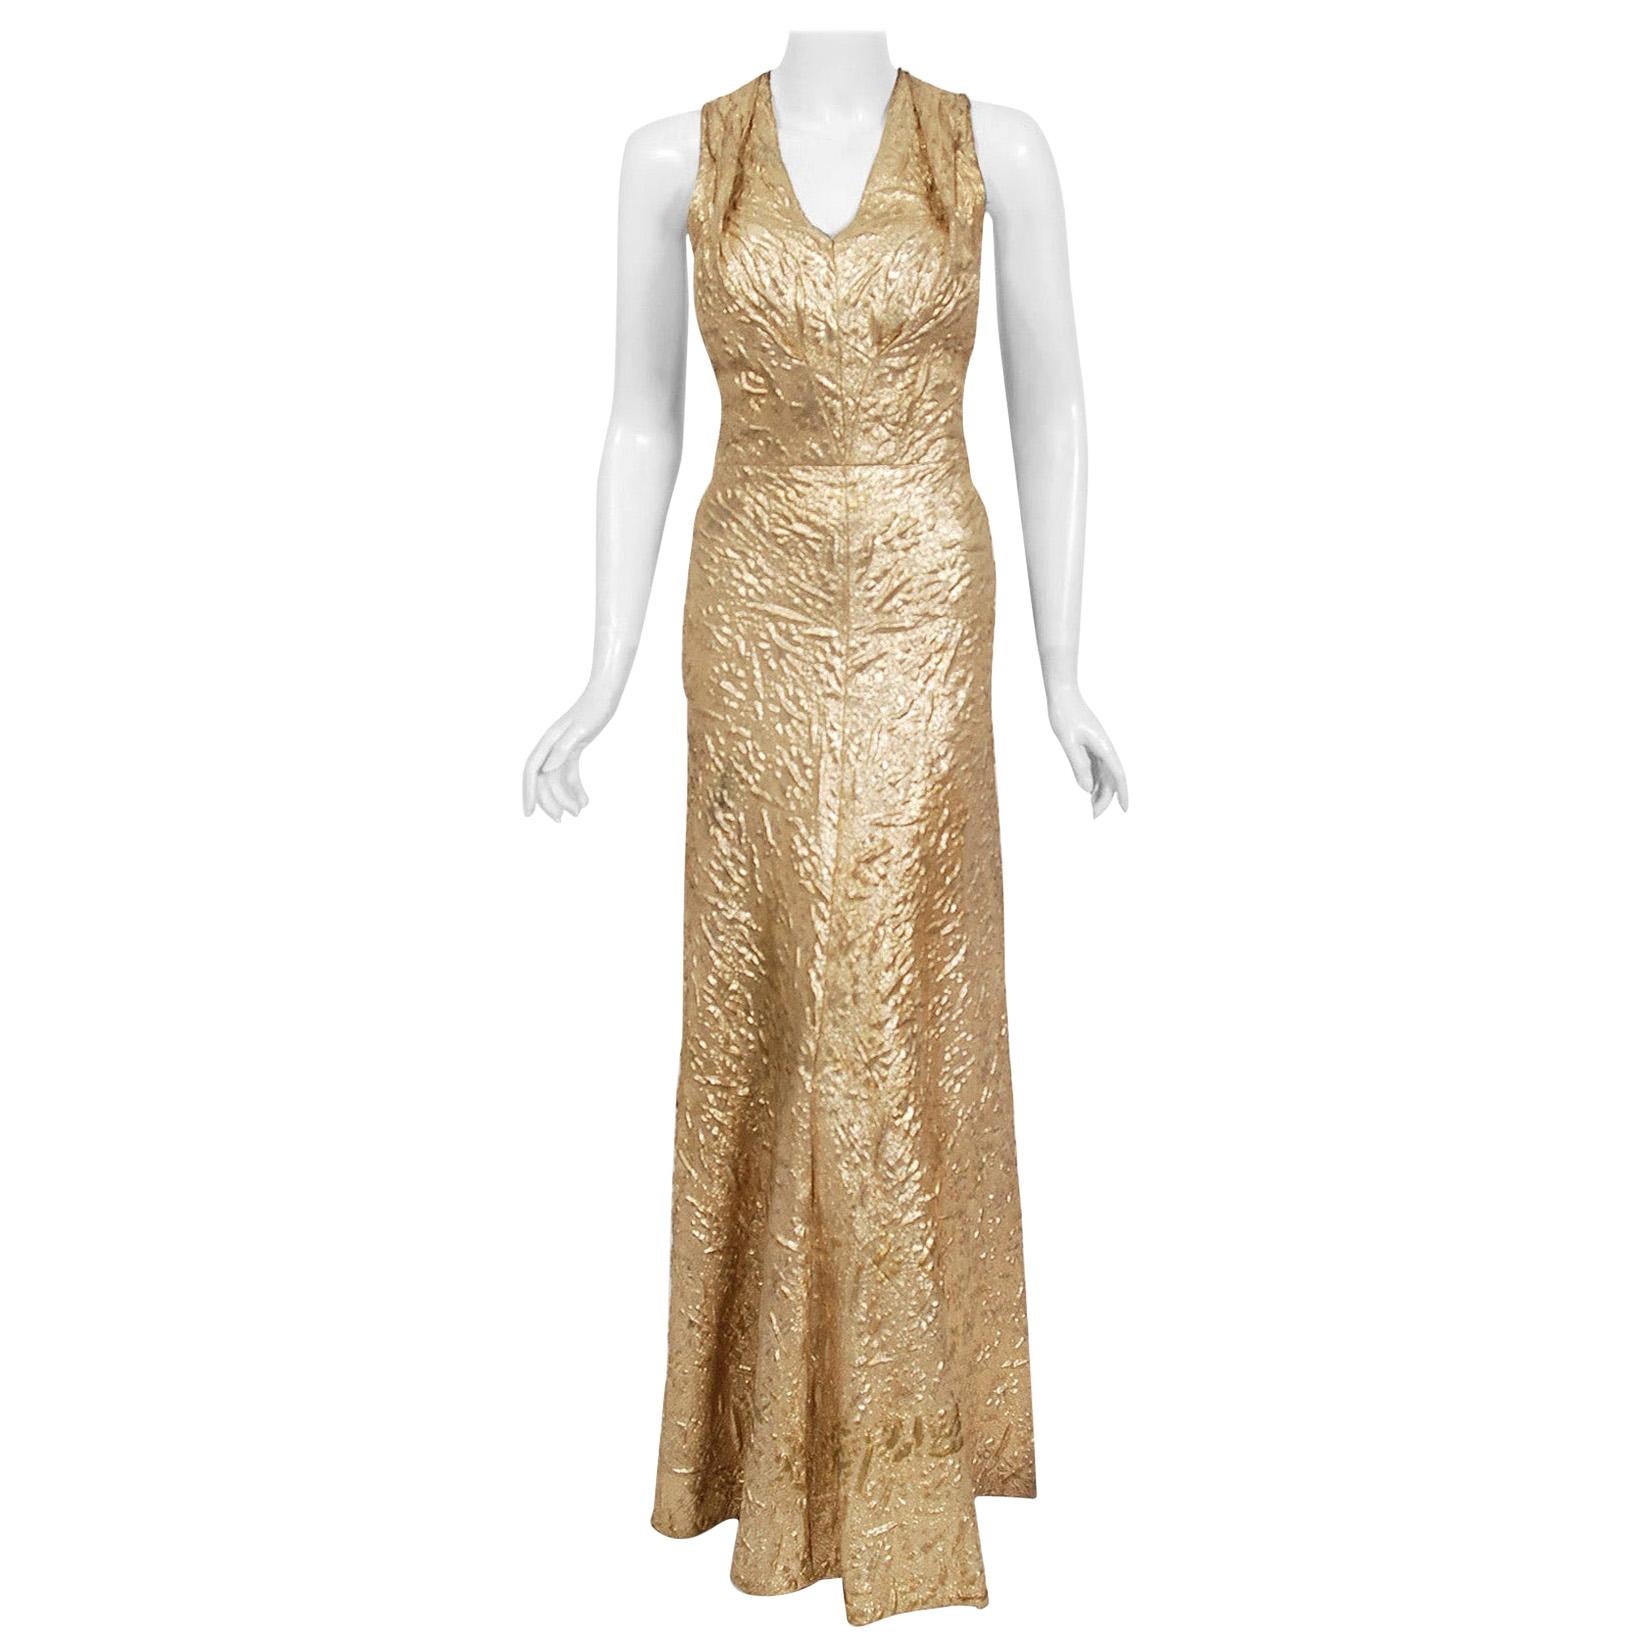 Vintage 1930's Couture Metallic Gold Textured Lamé Backless Bias-Cut Gown